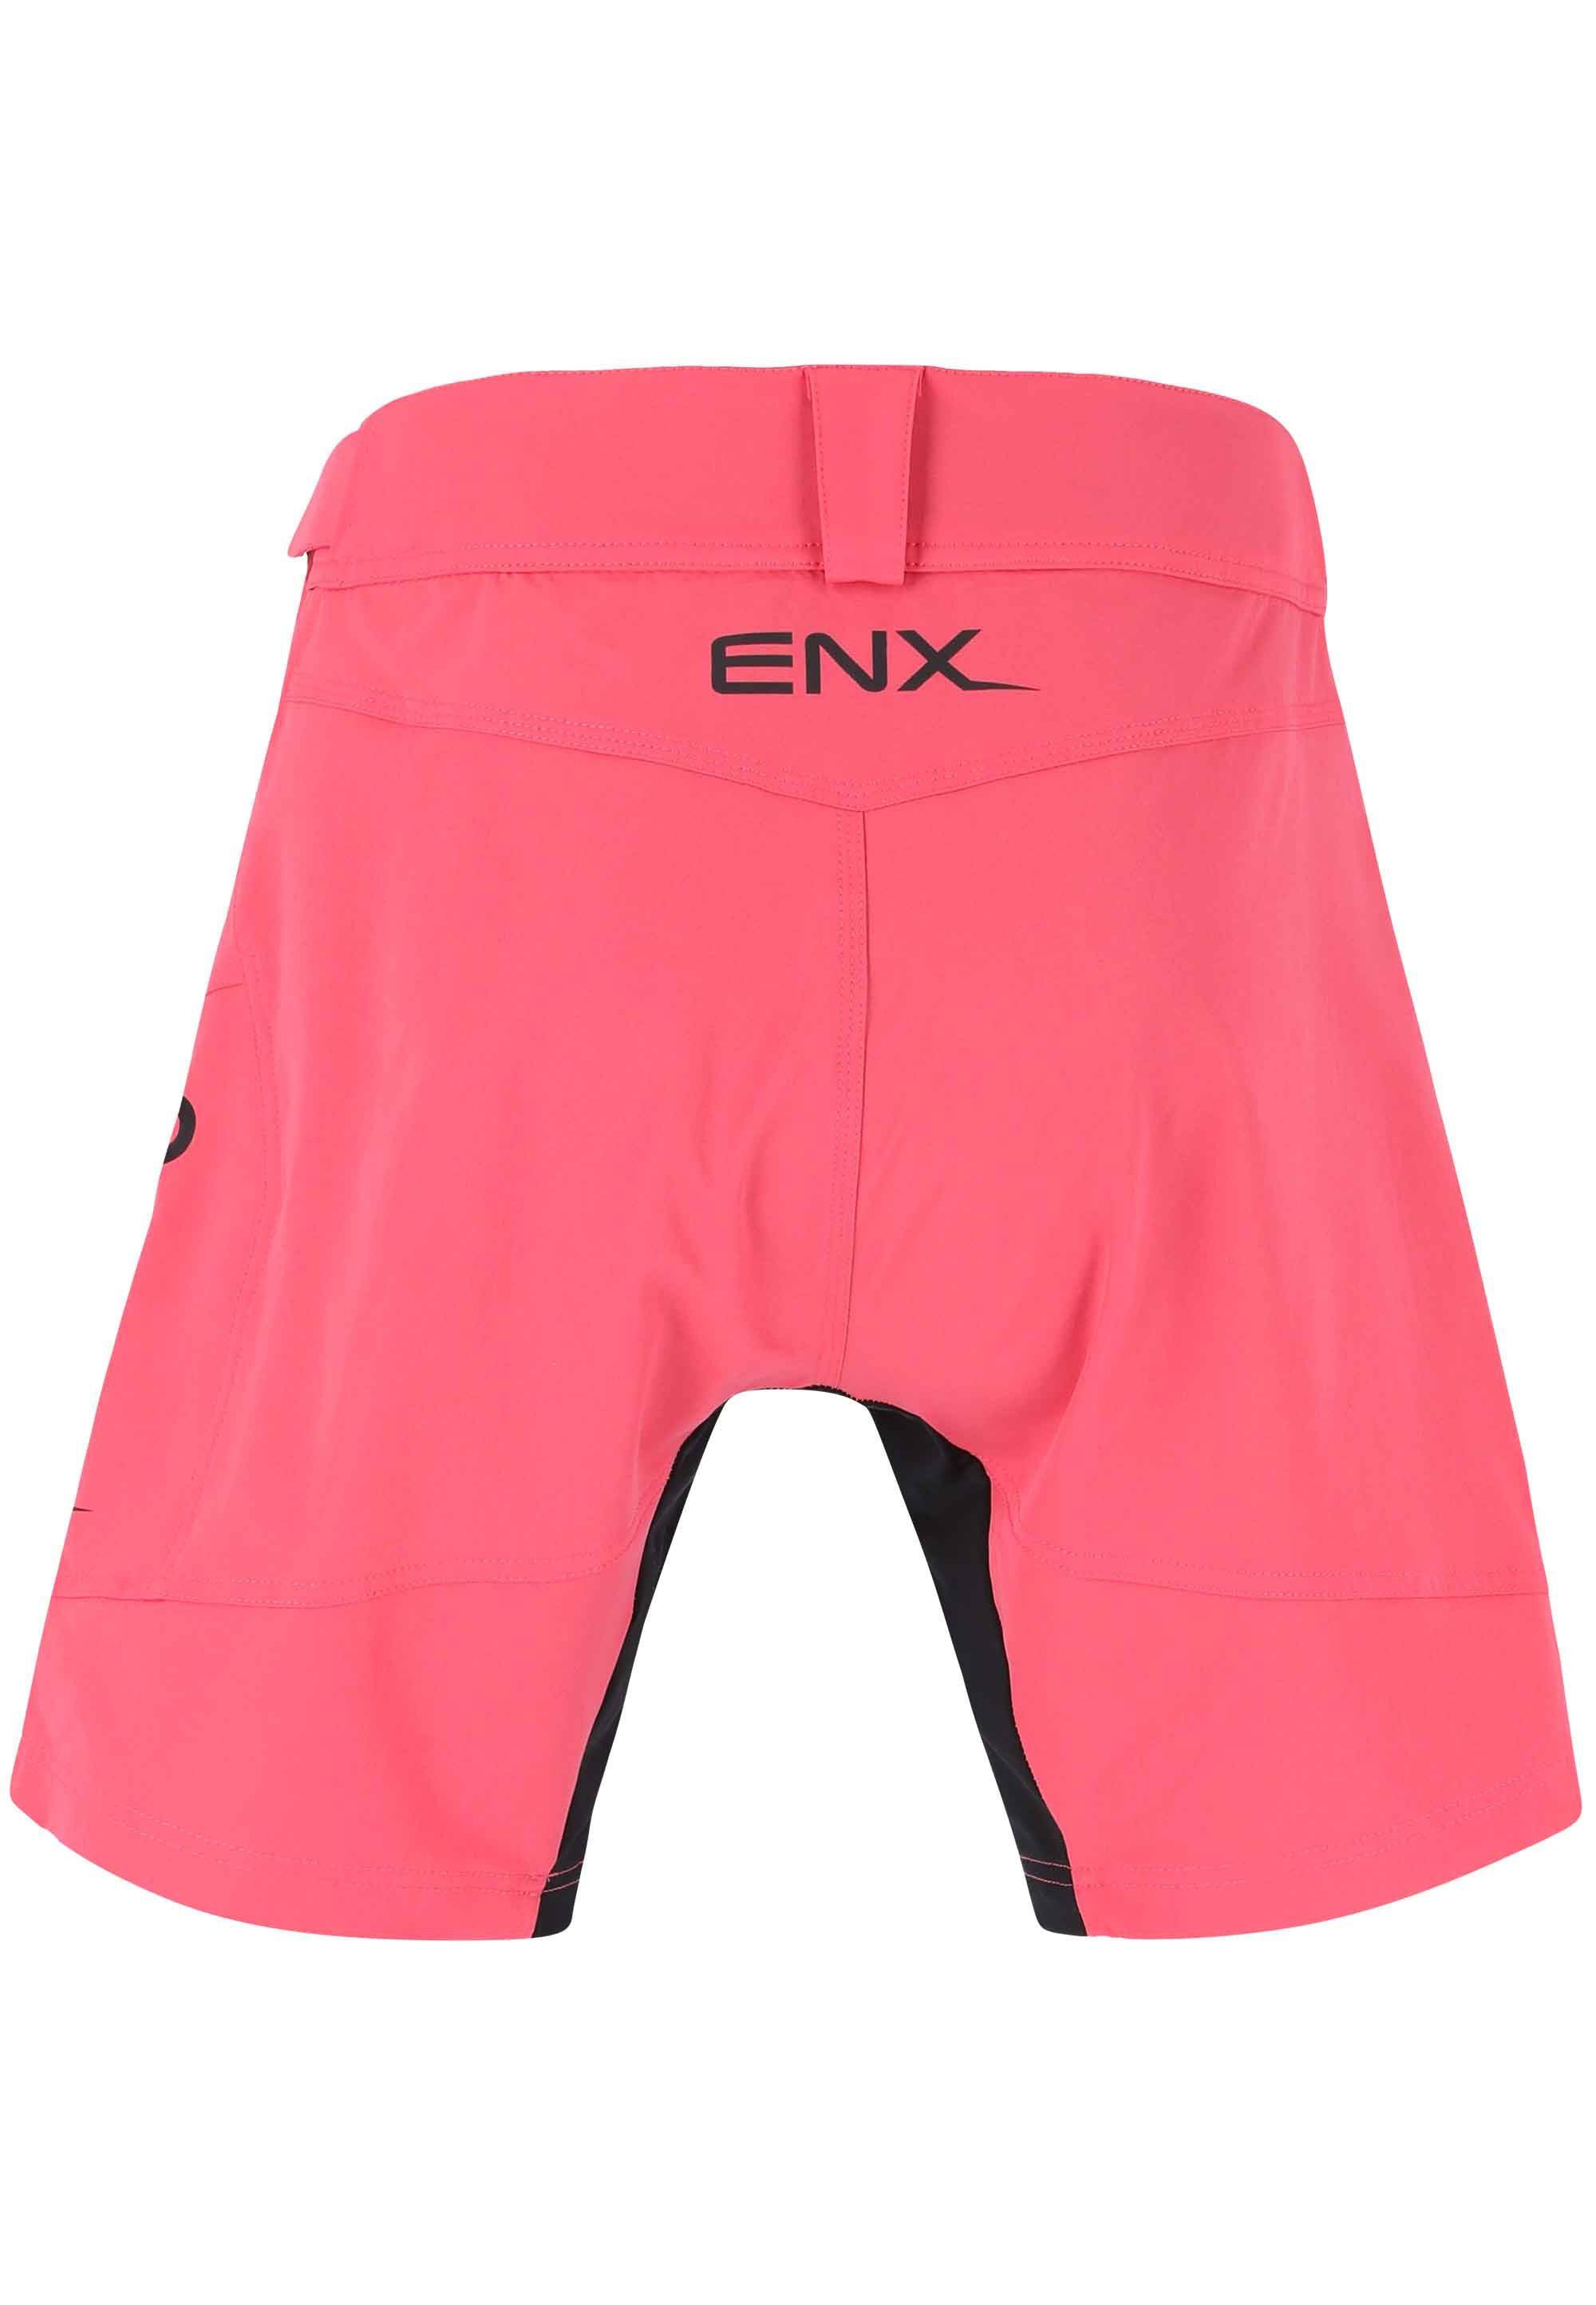 Shorts 1 2 W rosa Innen-Tights Radhose ENDURANCE herausnehmbarer Jamilla in mit